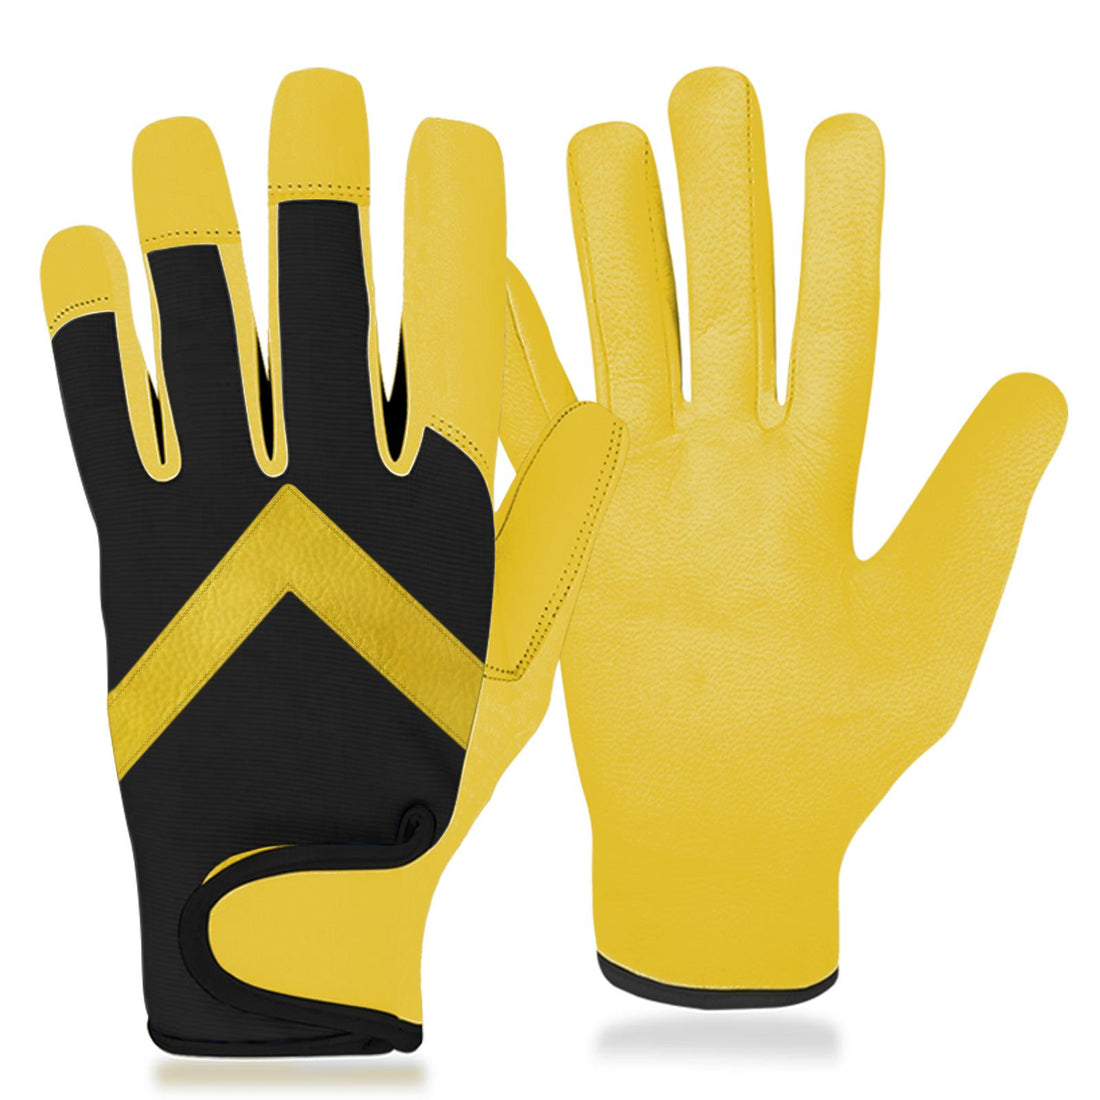 YNR Gardening Working Gloves Thorn Proof Flexible Heavy Duty Leather Mechanic Utility Dexterity Breathable Construction Gloves for Work Men Women